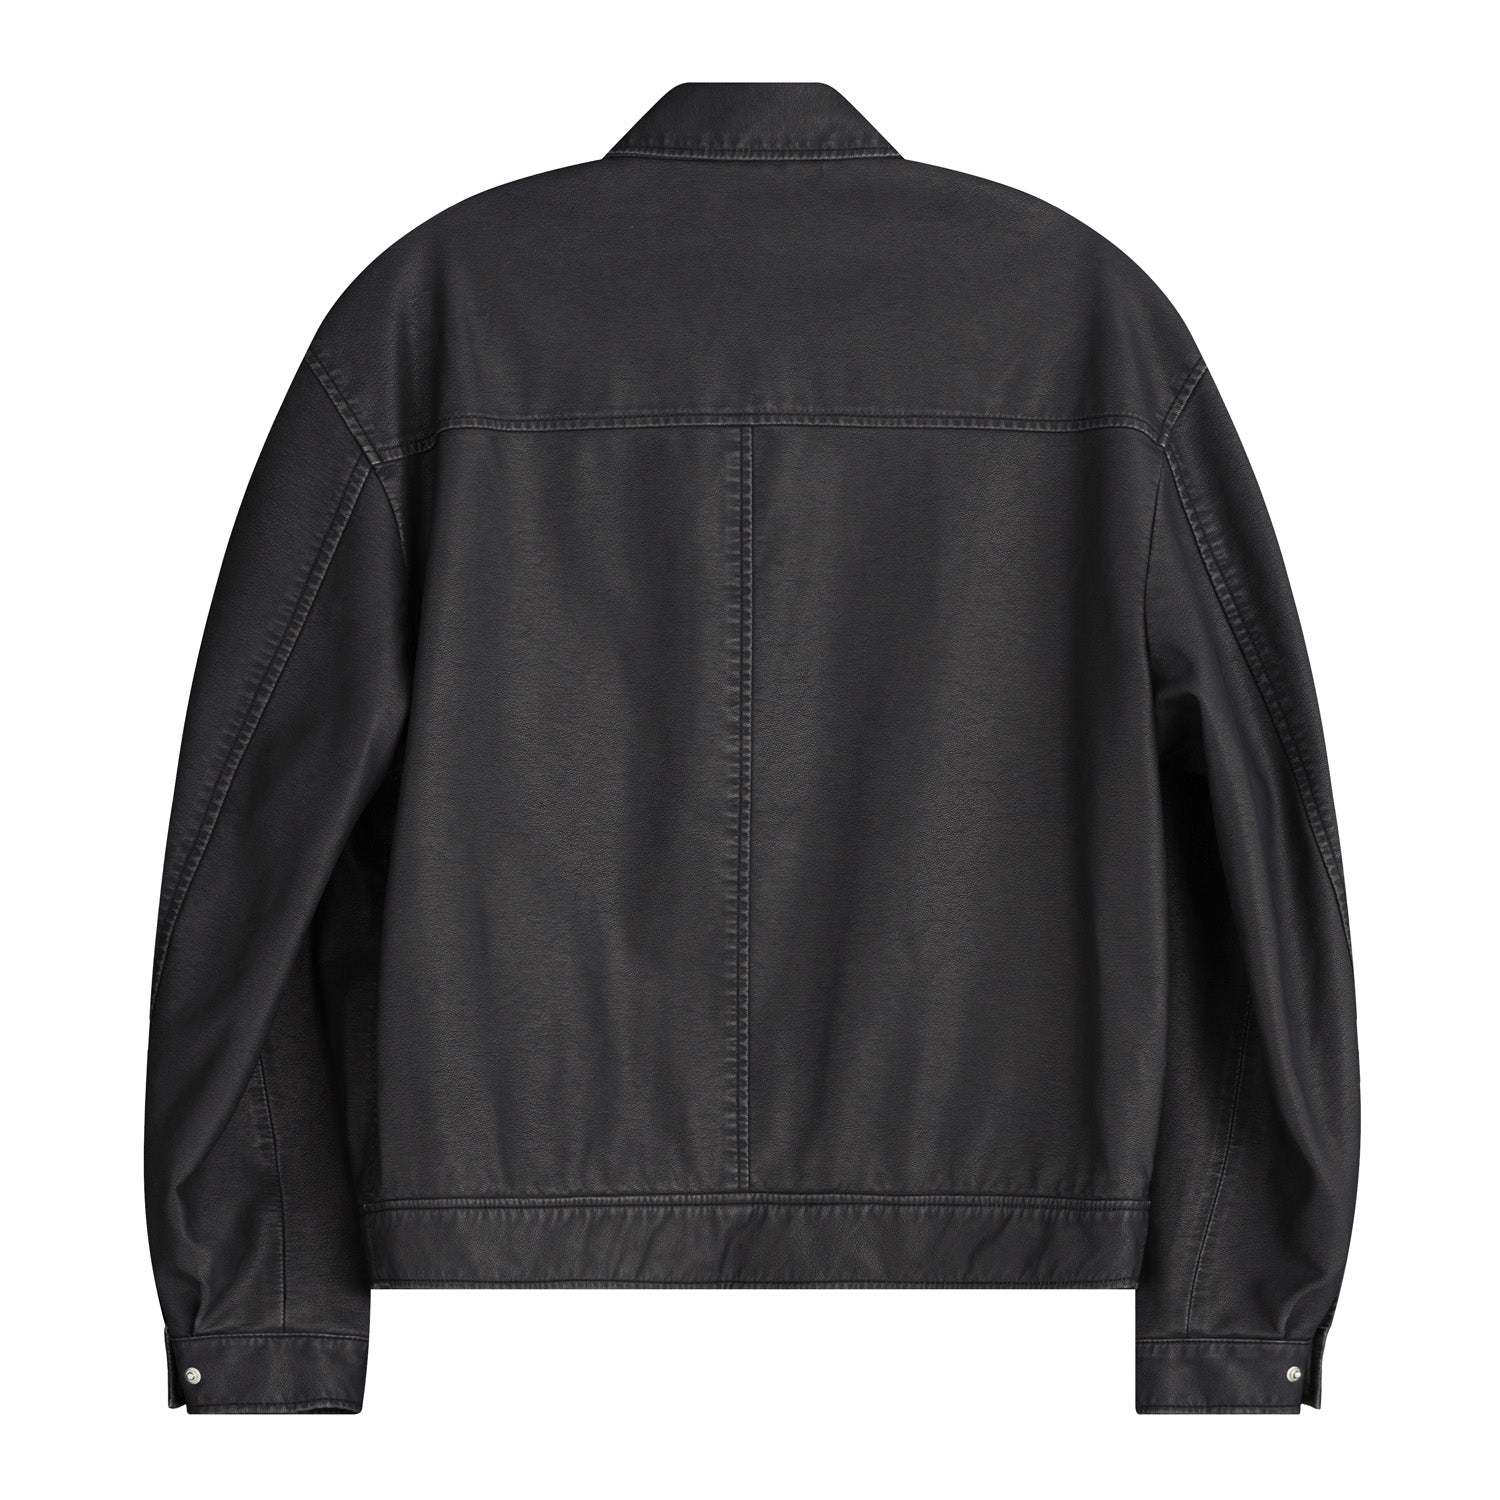 Overfit Curved Blouson Jacket (Black)